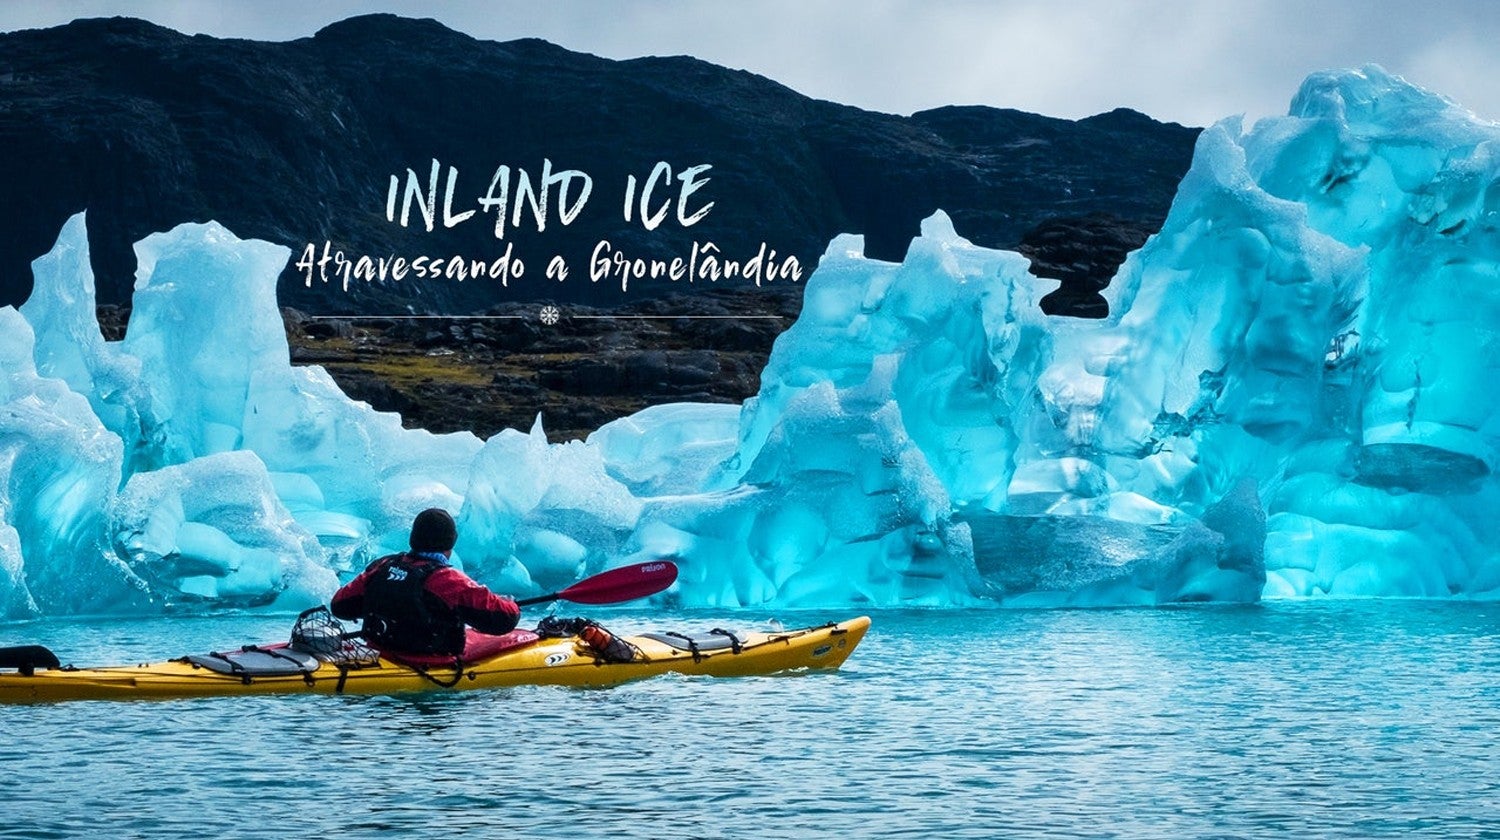 InLand Ice - Atravessando a Gronelndia